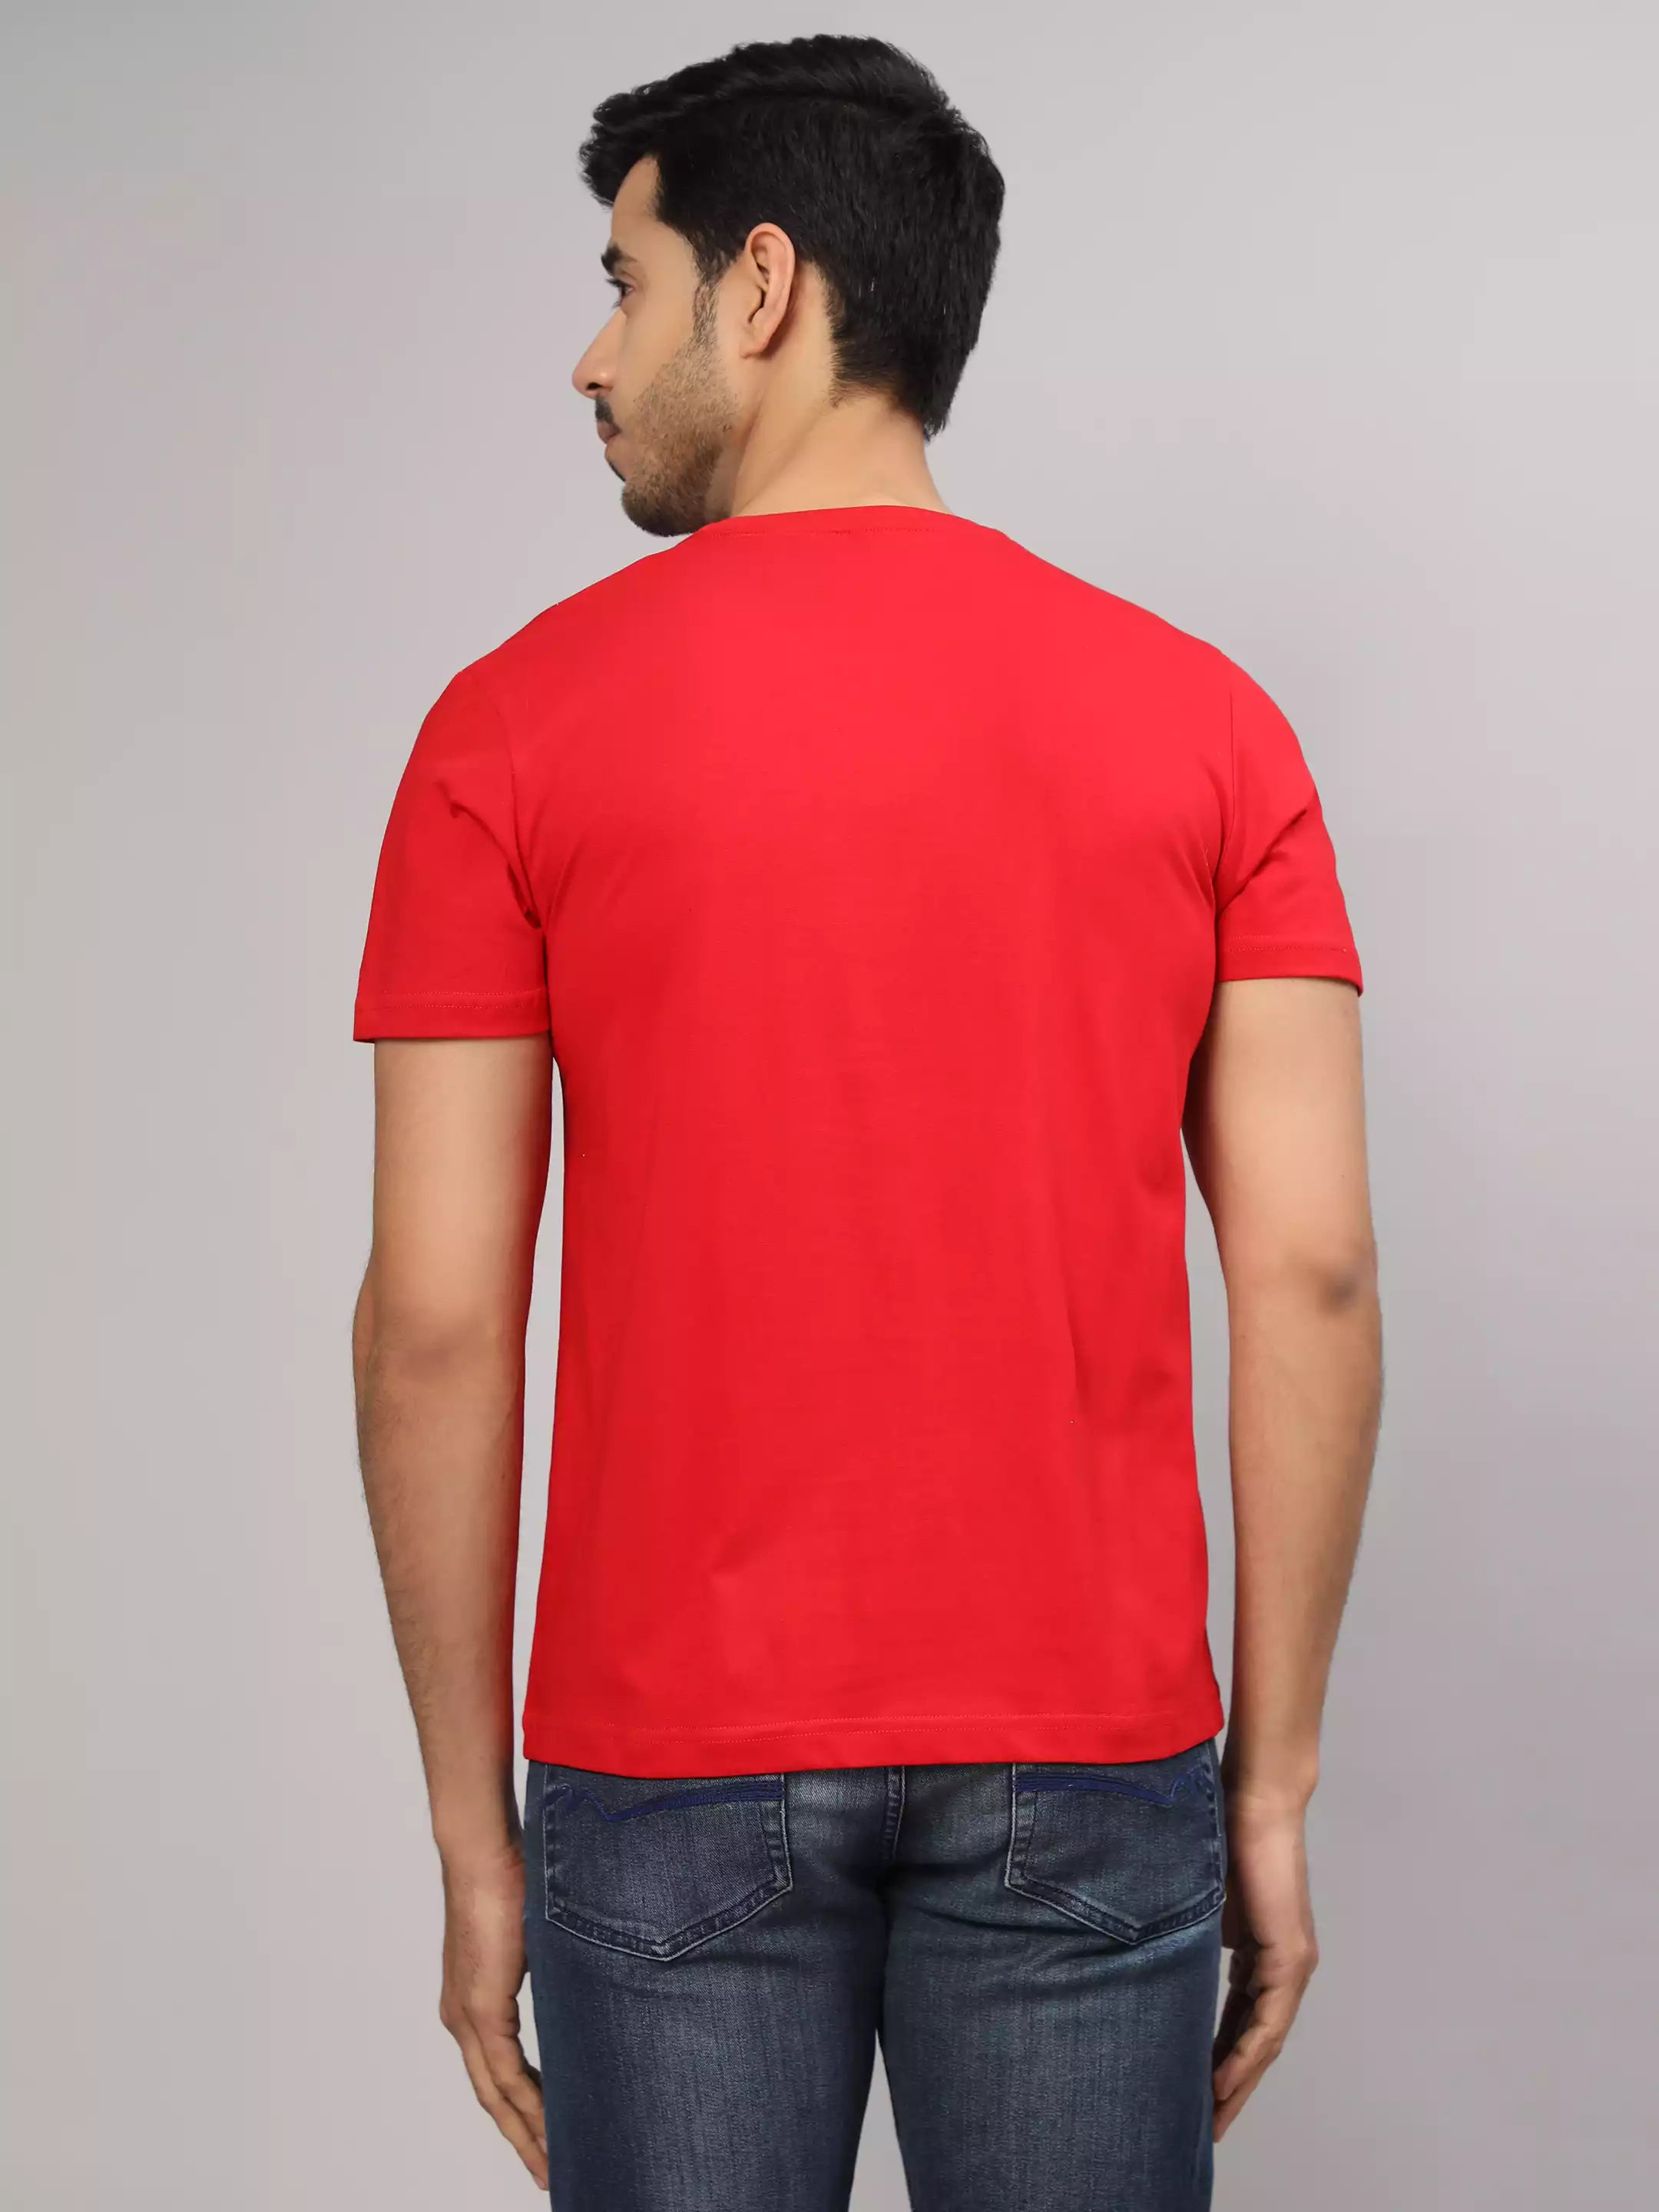 Influencer - Sukhiaatma Unisex Graphic Printed Red T-shirt